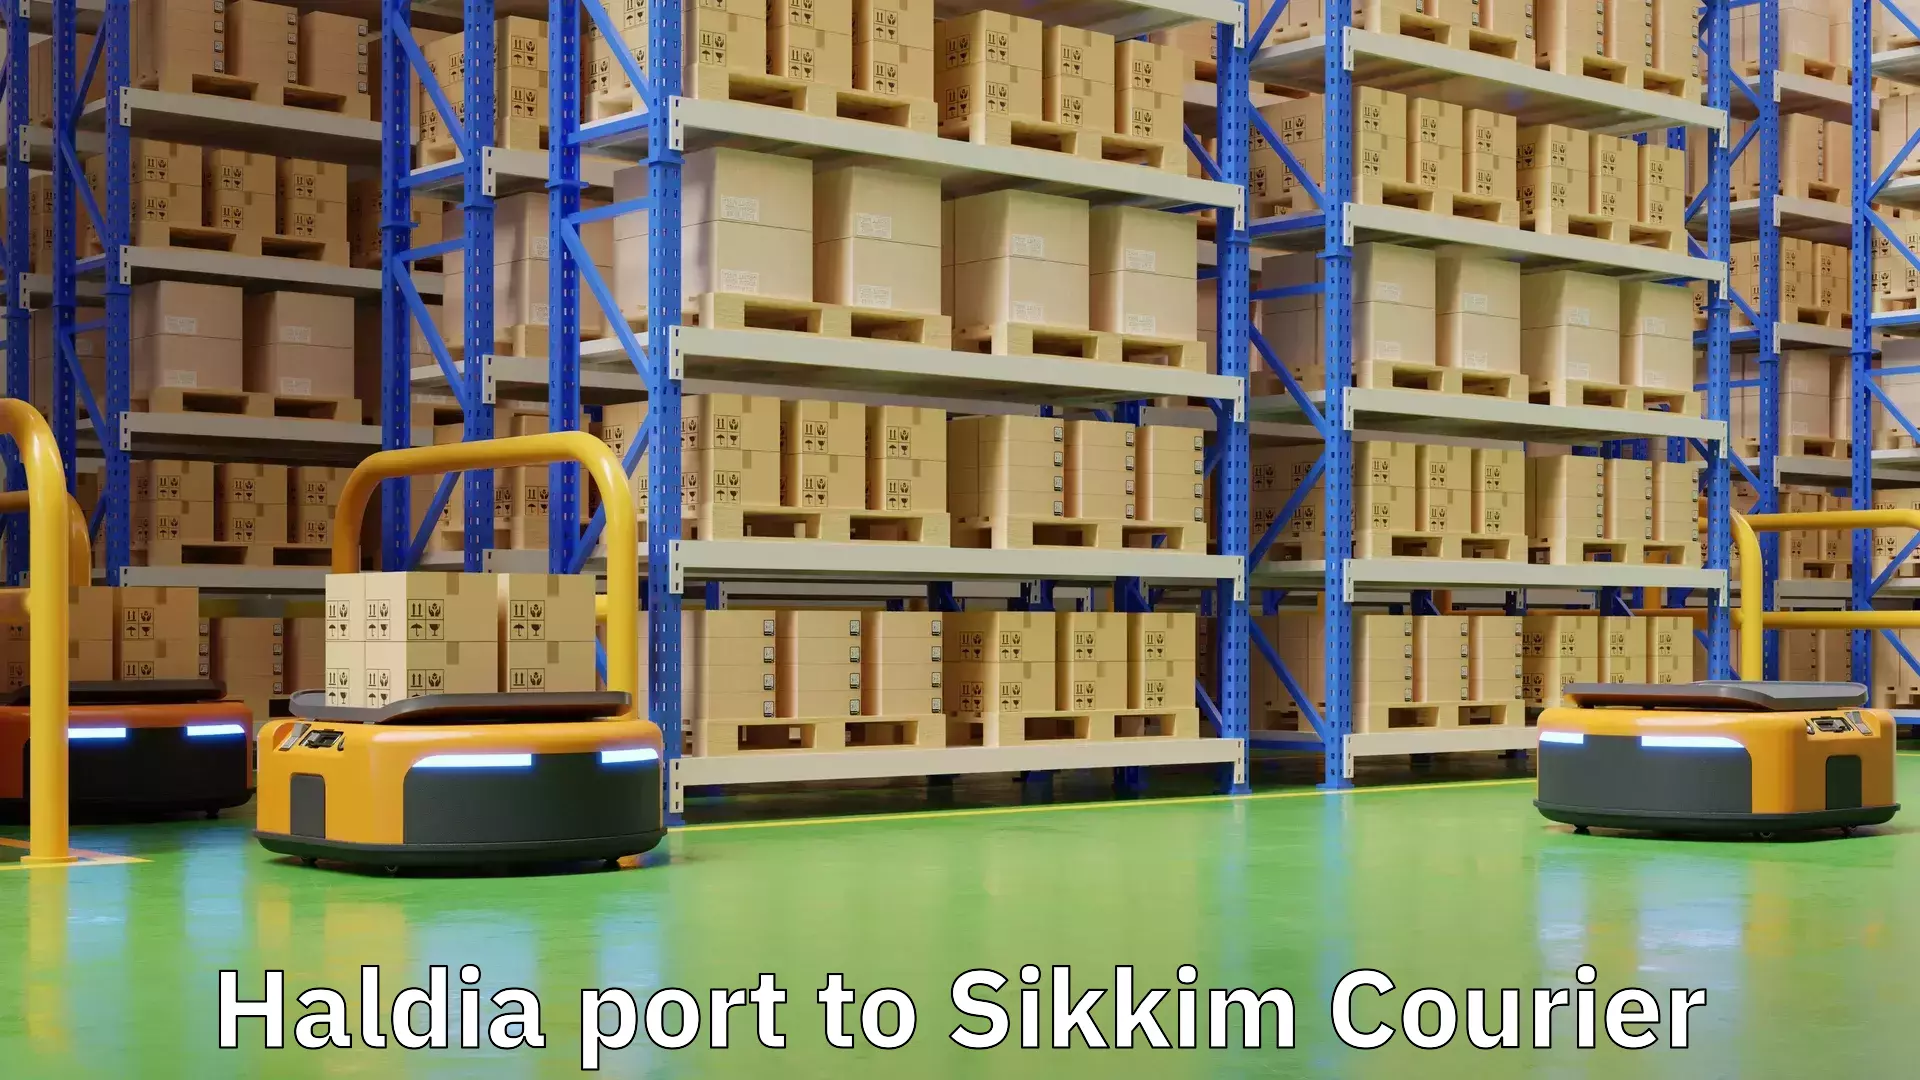 Local delivery service Haldia port to Sikkim